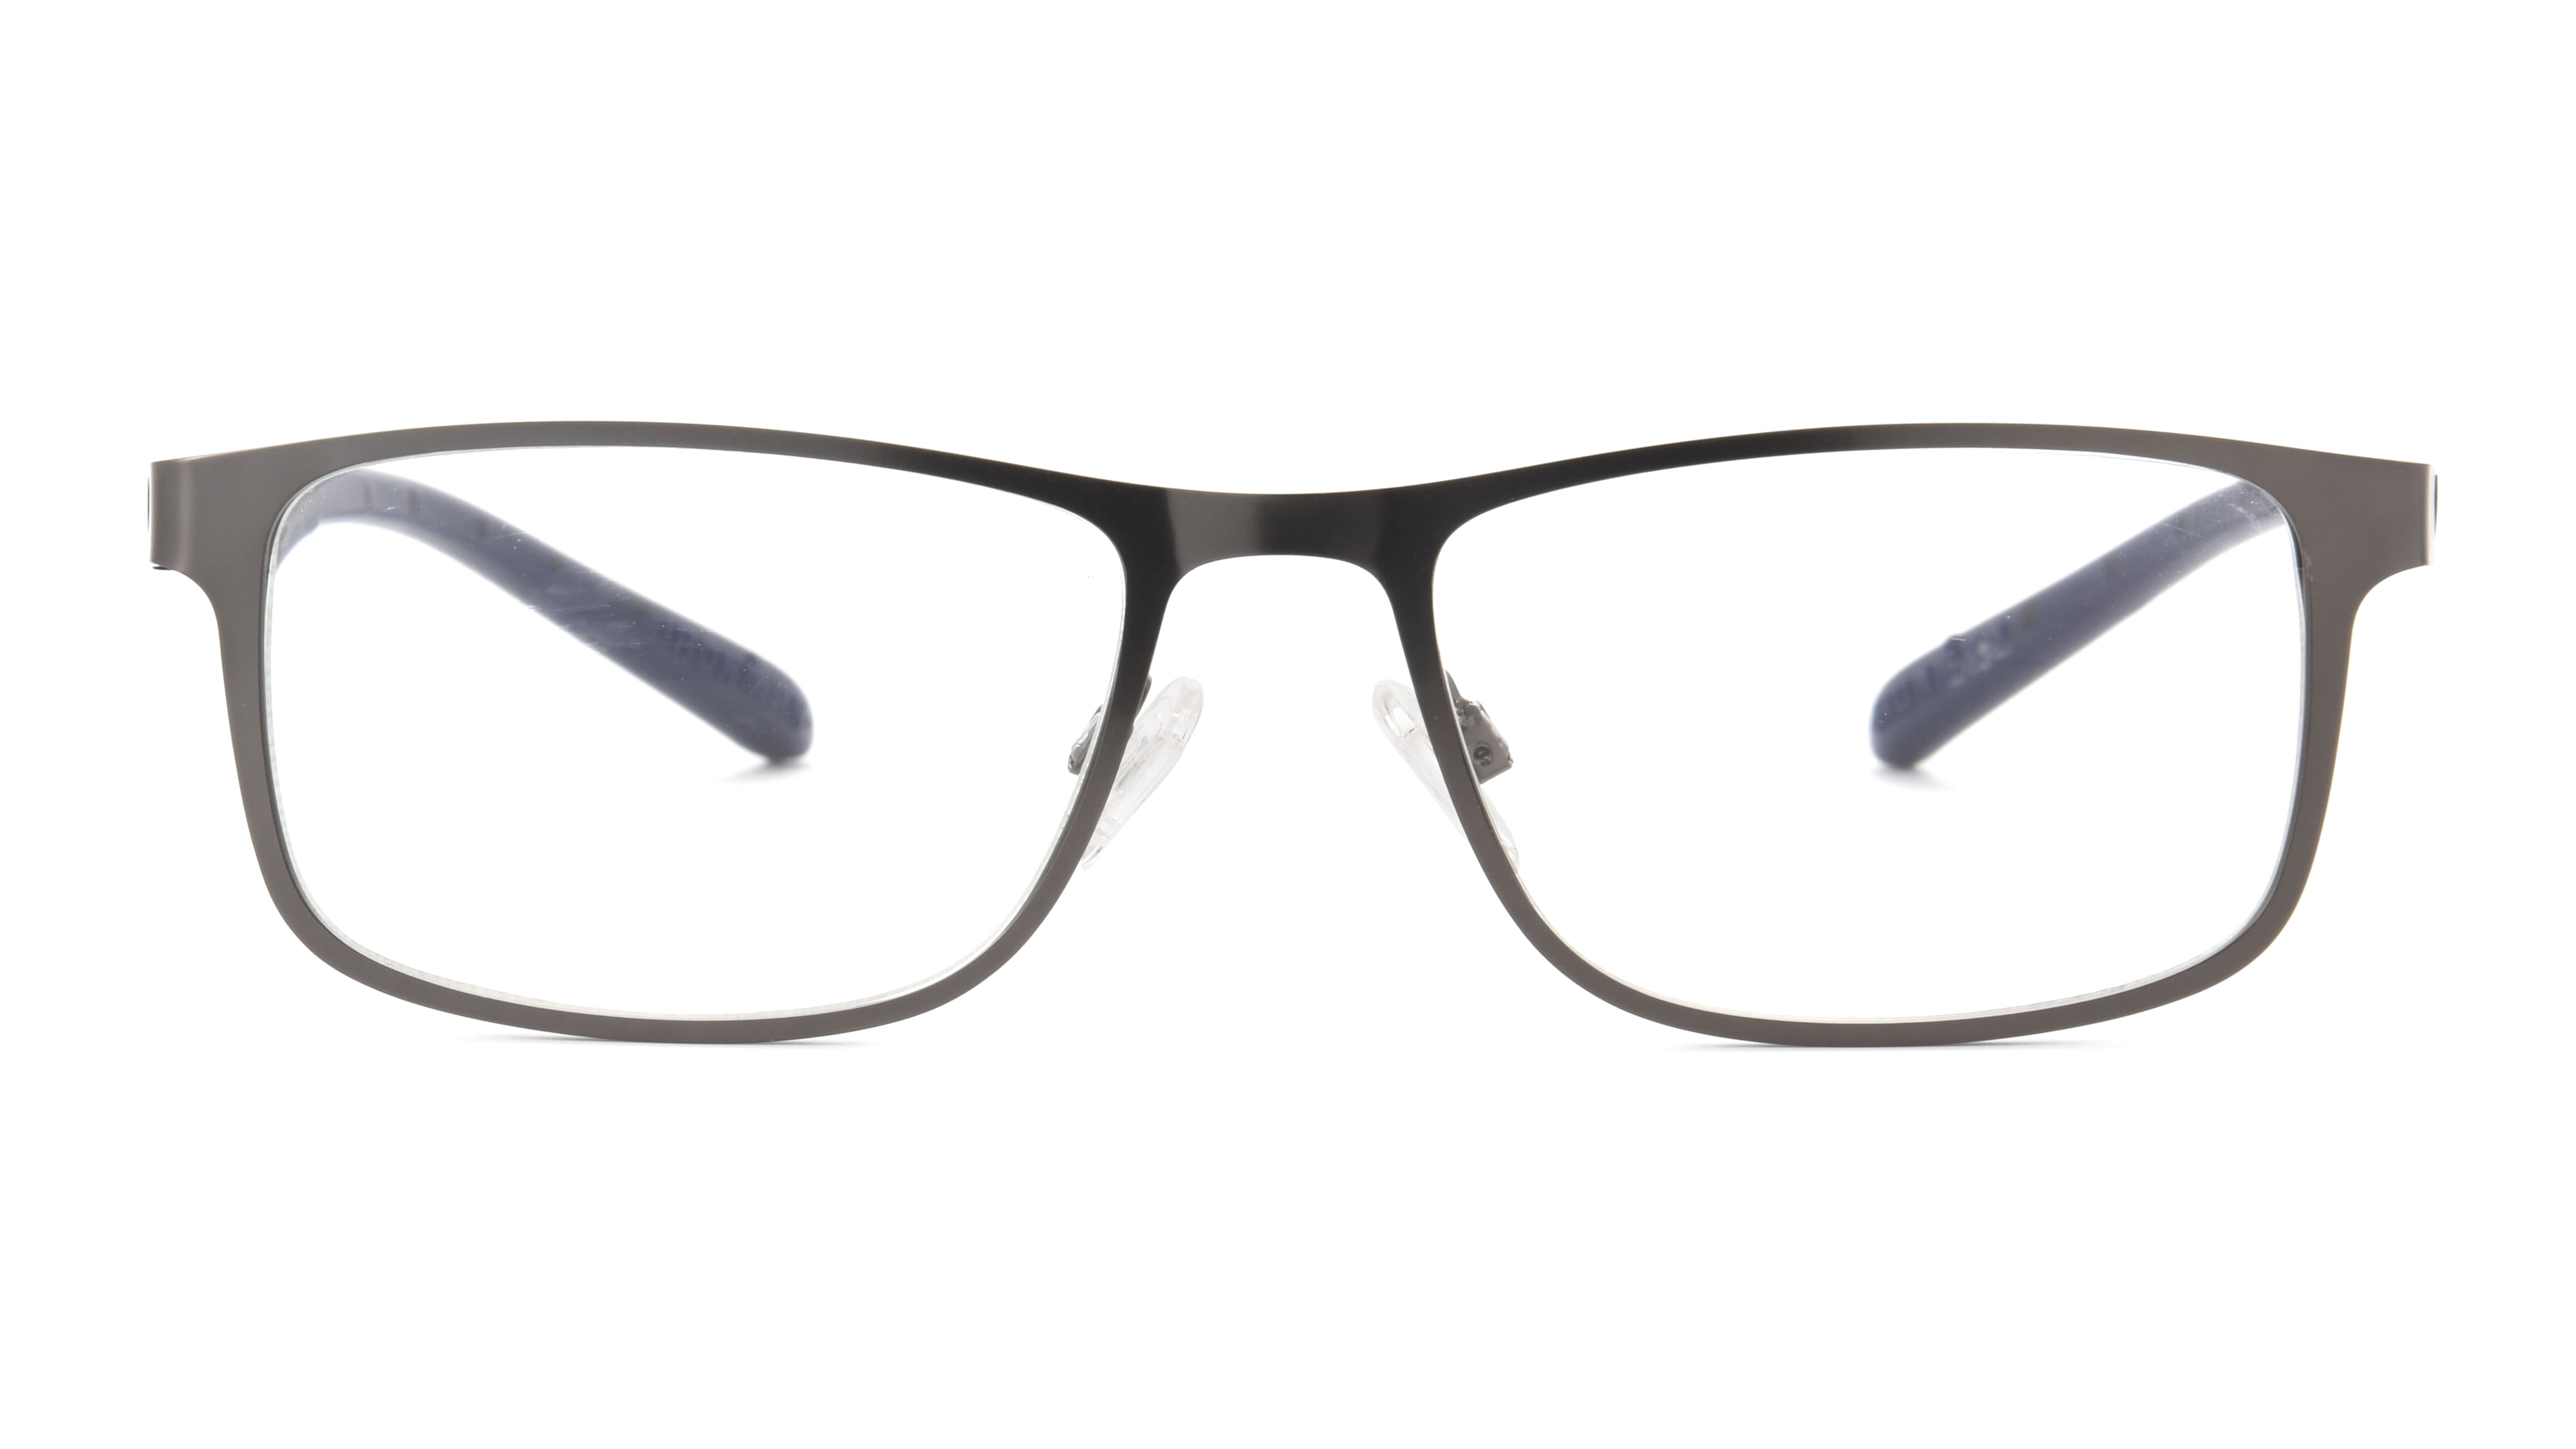 Ironman Rectangle Black Reader Eyeglass 1.75